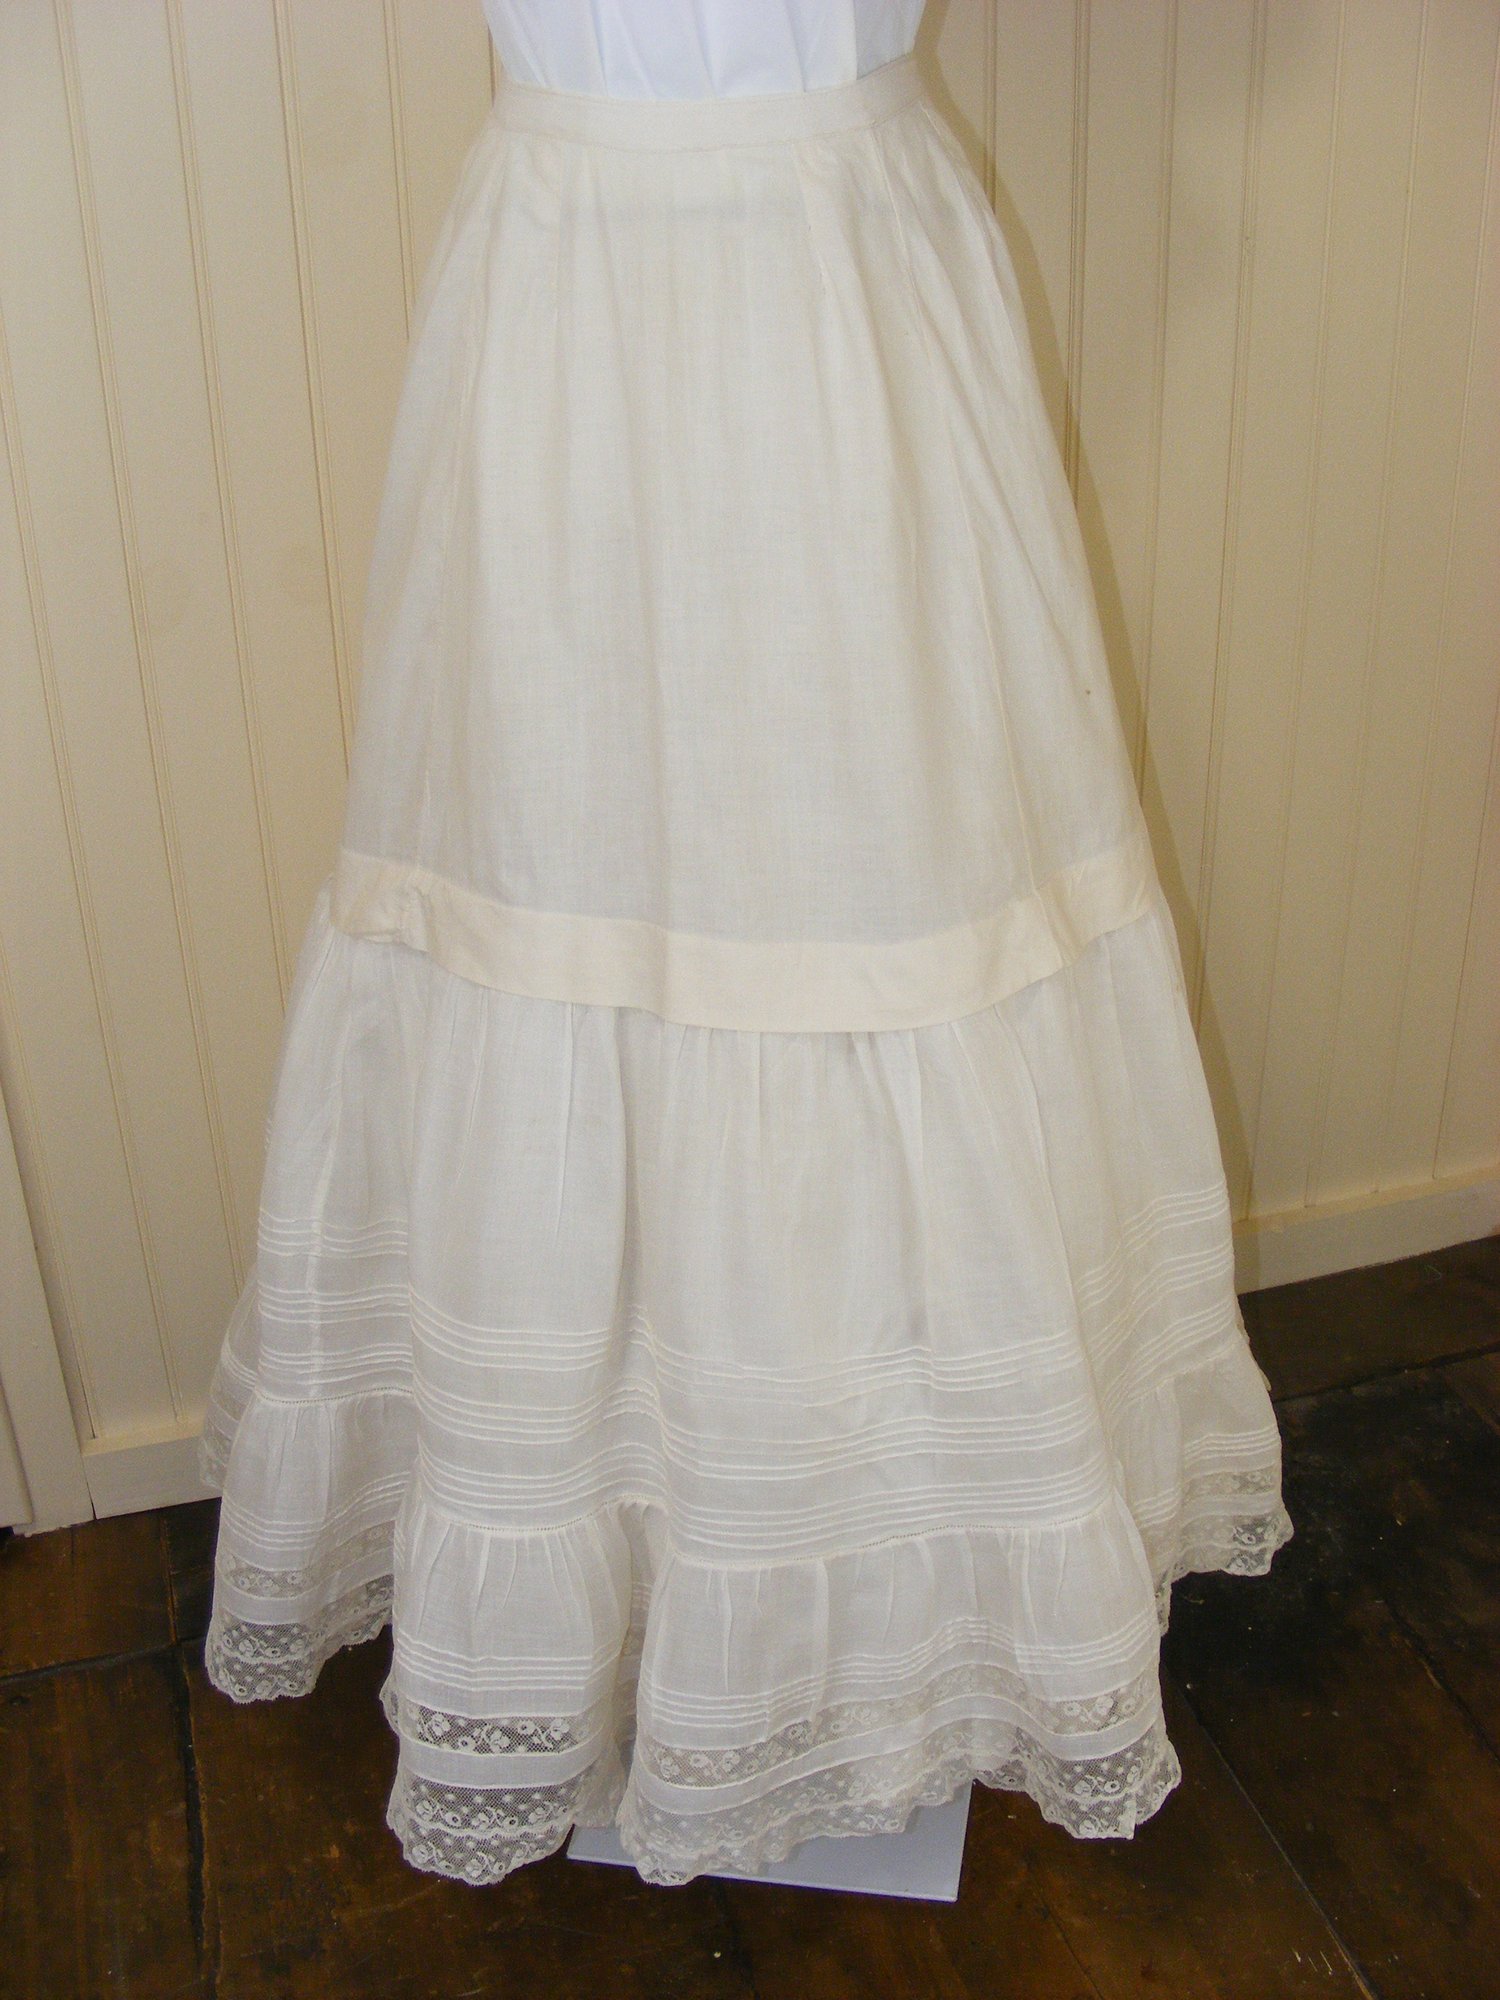 Victorian Petticoat 1880s White Cotton Handmade Lace Hem